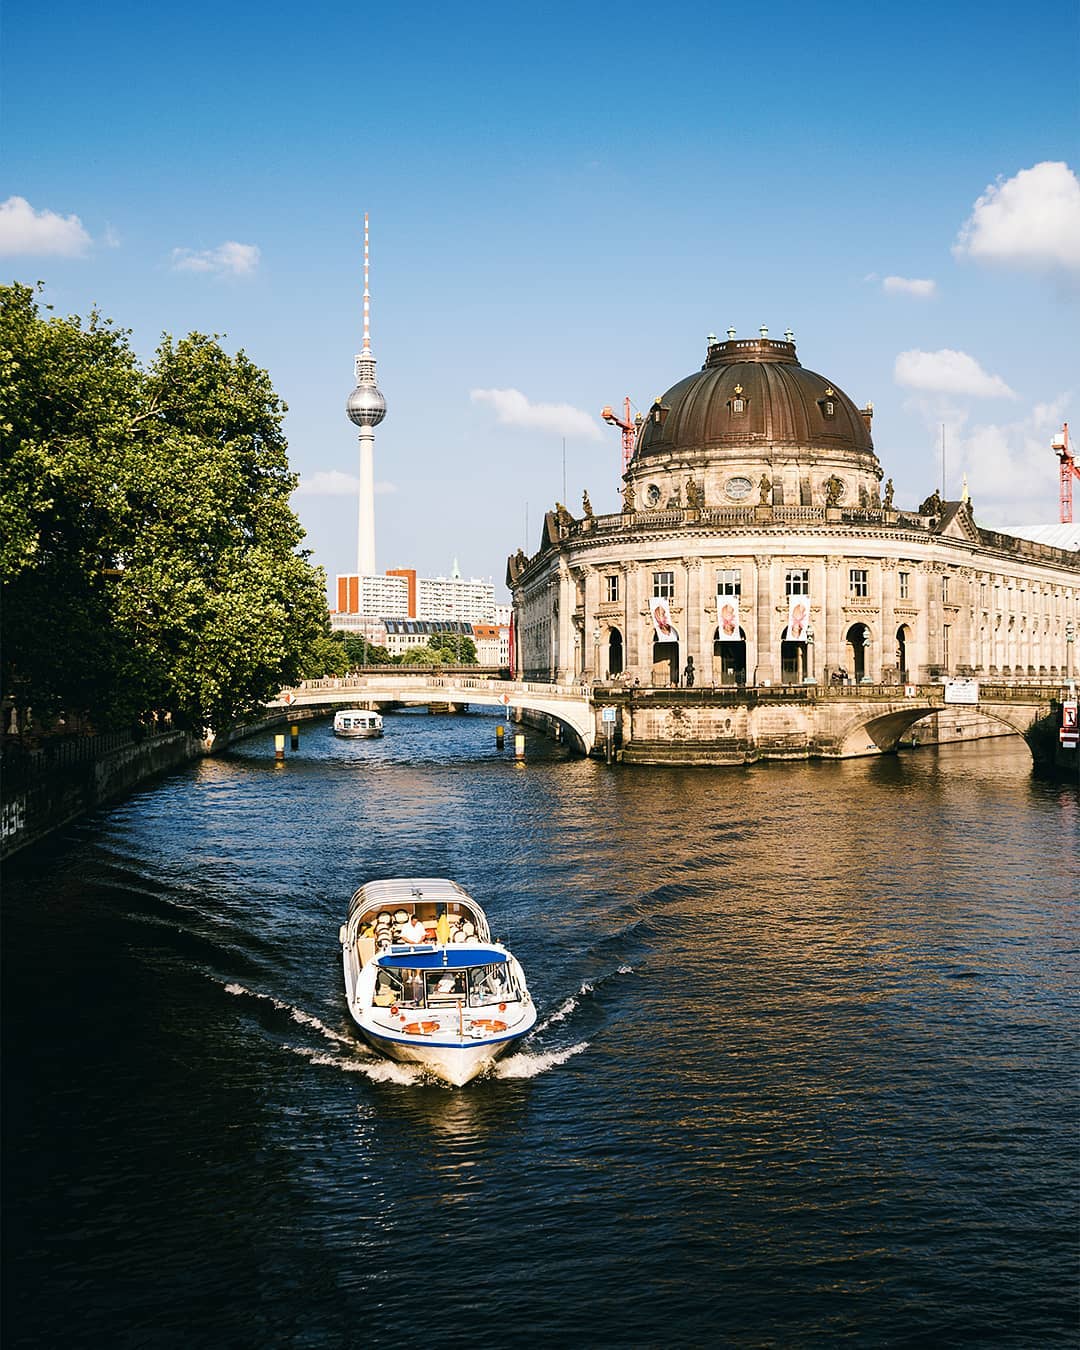 River cruise
.
.
.
#BerlinMyLove #bestgermanypics #in_germany #travel_2_germany #LifeofGermany #DeutschlandMyLove #loves_united_germany #europe_vacations#wonderlustberlin #berlingram #ig_berlincity #ig_berlin #TopBerlinPhoto #Loves_United_Berlin #Loves_Berlin #berlinbreeze #visit_berlin #ig_germany #lastingvisuals #main_vision #master_shots #exclusive_shots #hubs_united #photographysouls #worldbestgram #collectivelycreate #shotzdelight #xposuremag #iglobal_photographers #alluring_deutschland